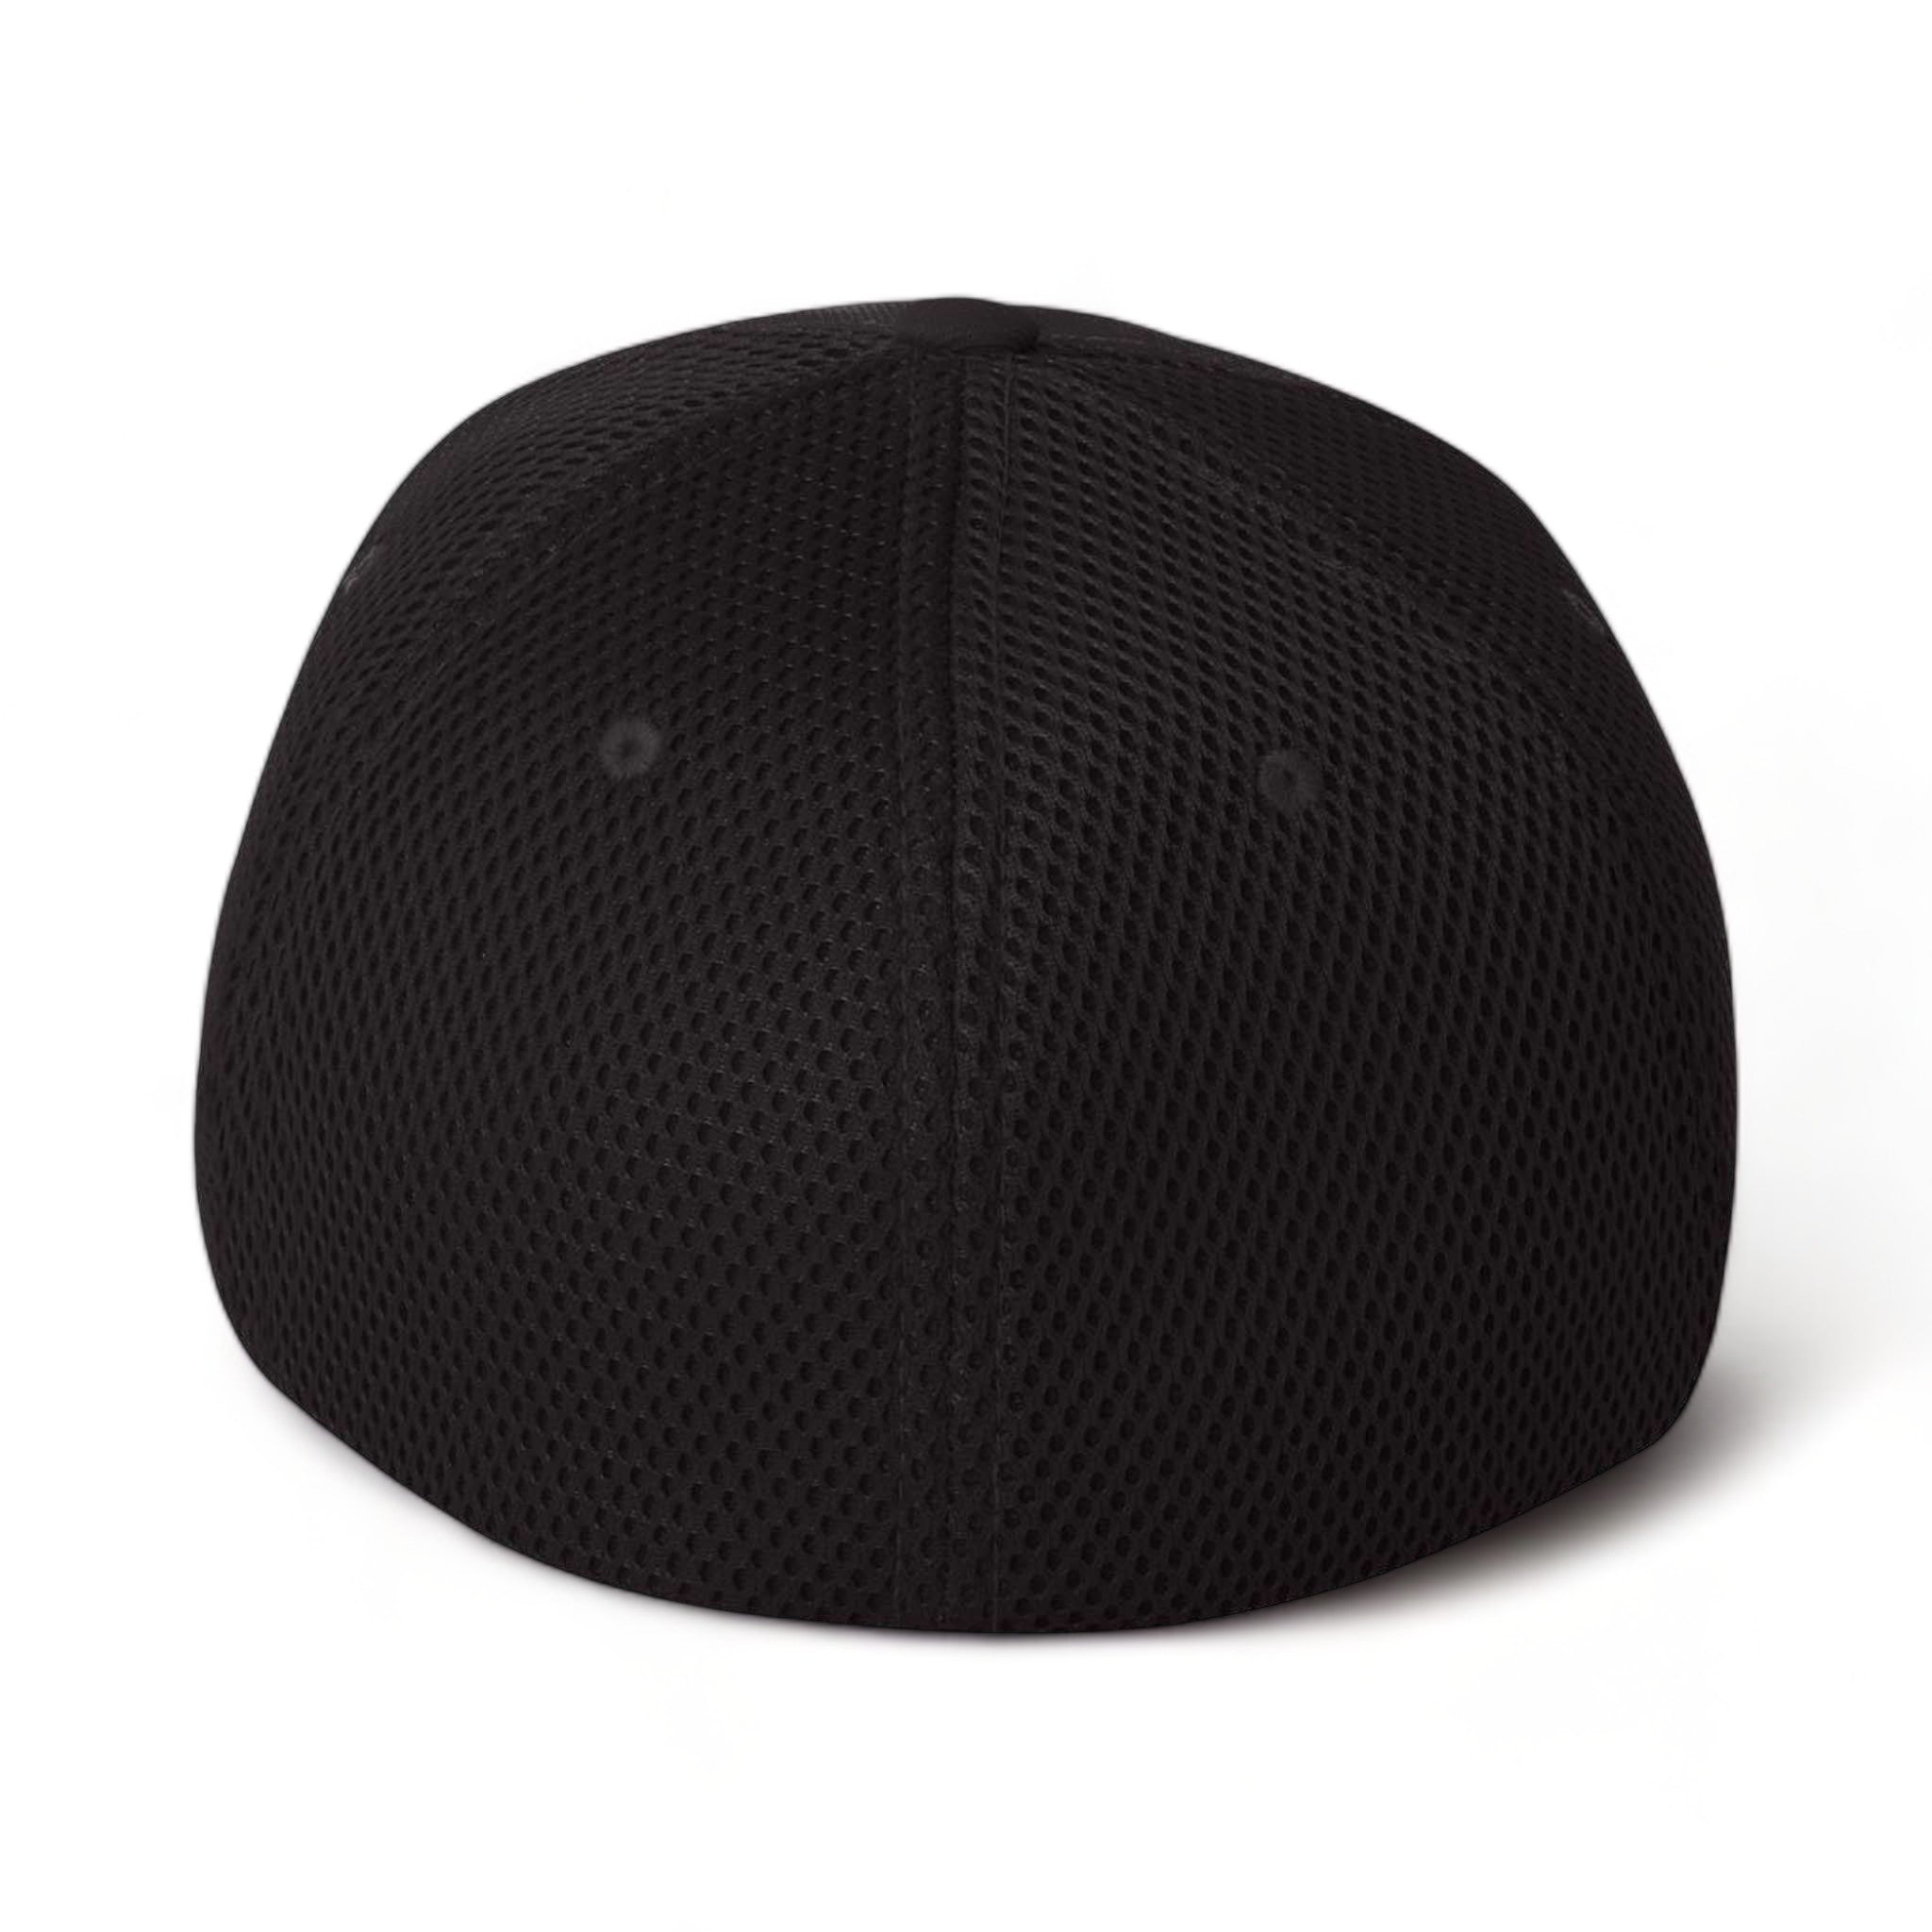 Back view of Flexfit 6533 custom hat in black